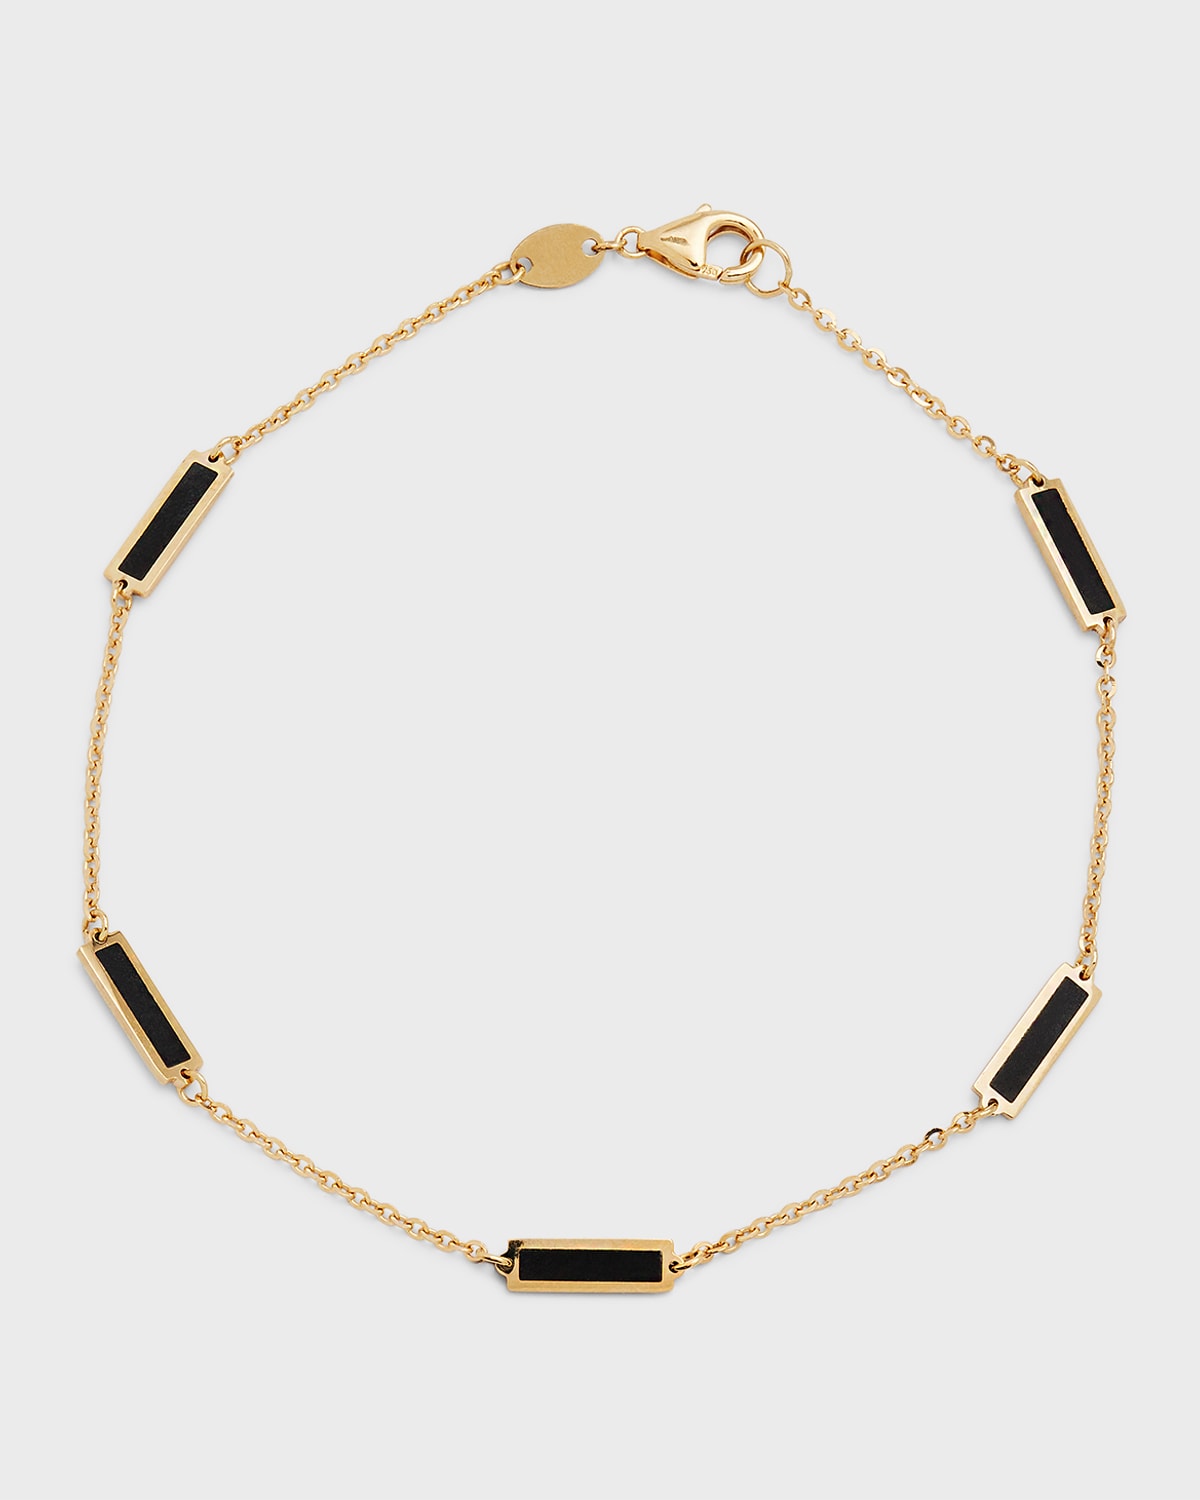 Frederic Sage 18k Yellow Gold Black Onyx Inlay Bracelet